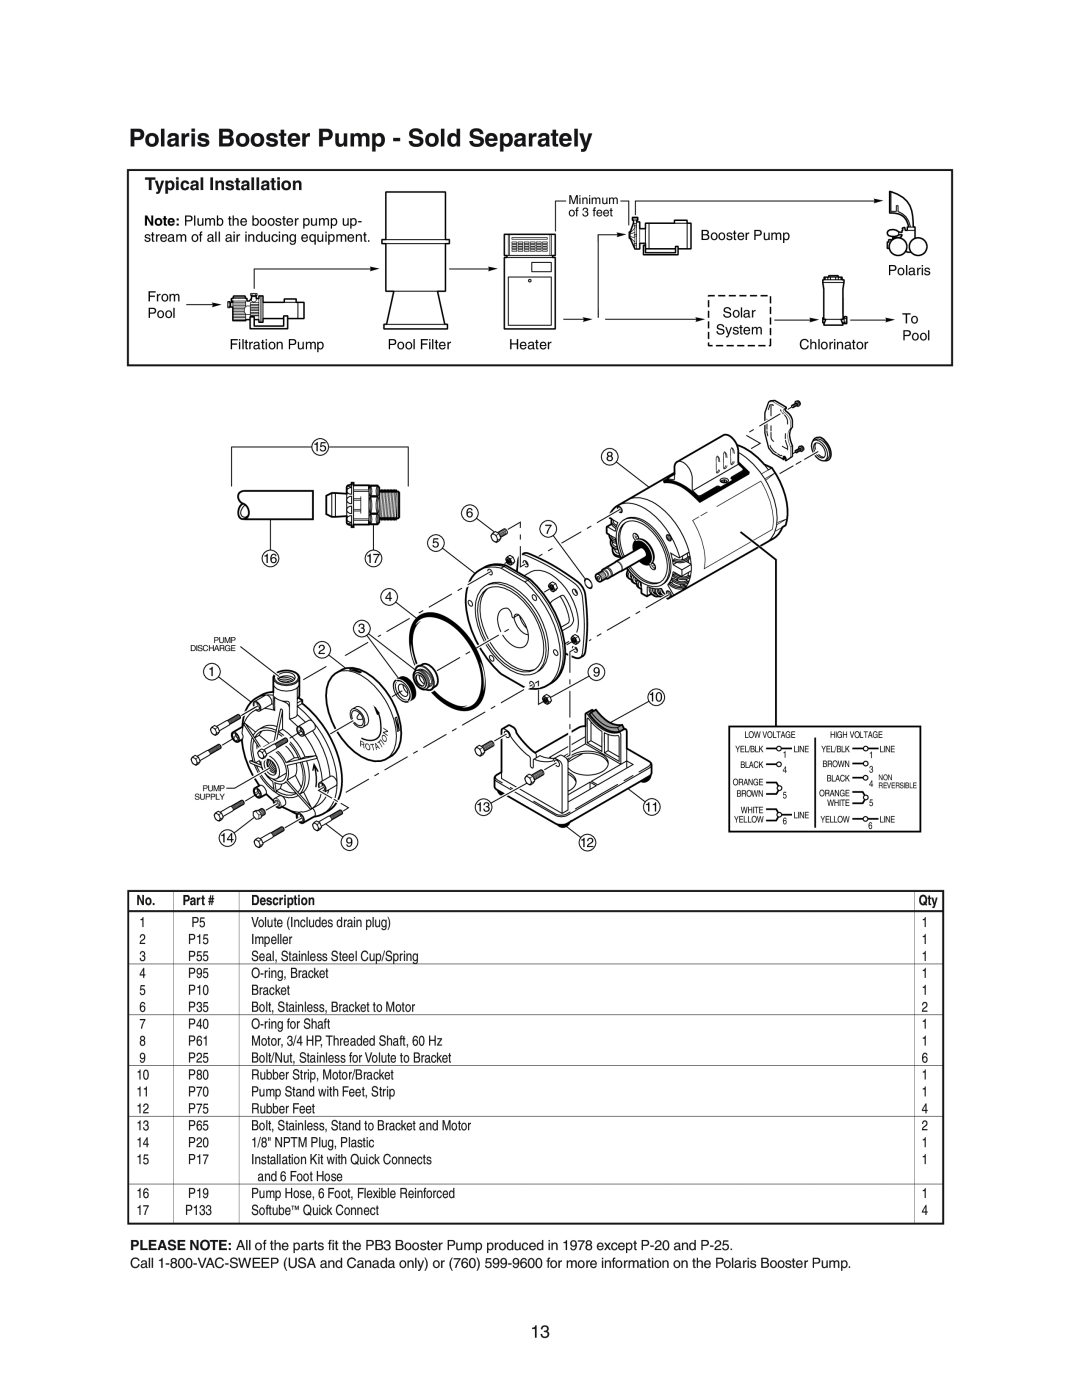 Polaris 380 owner manual Polaris Booster Pump - Sold Separately, Typical Installation, Description 